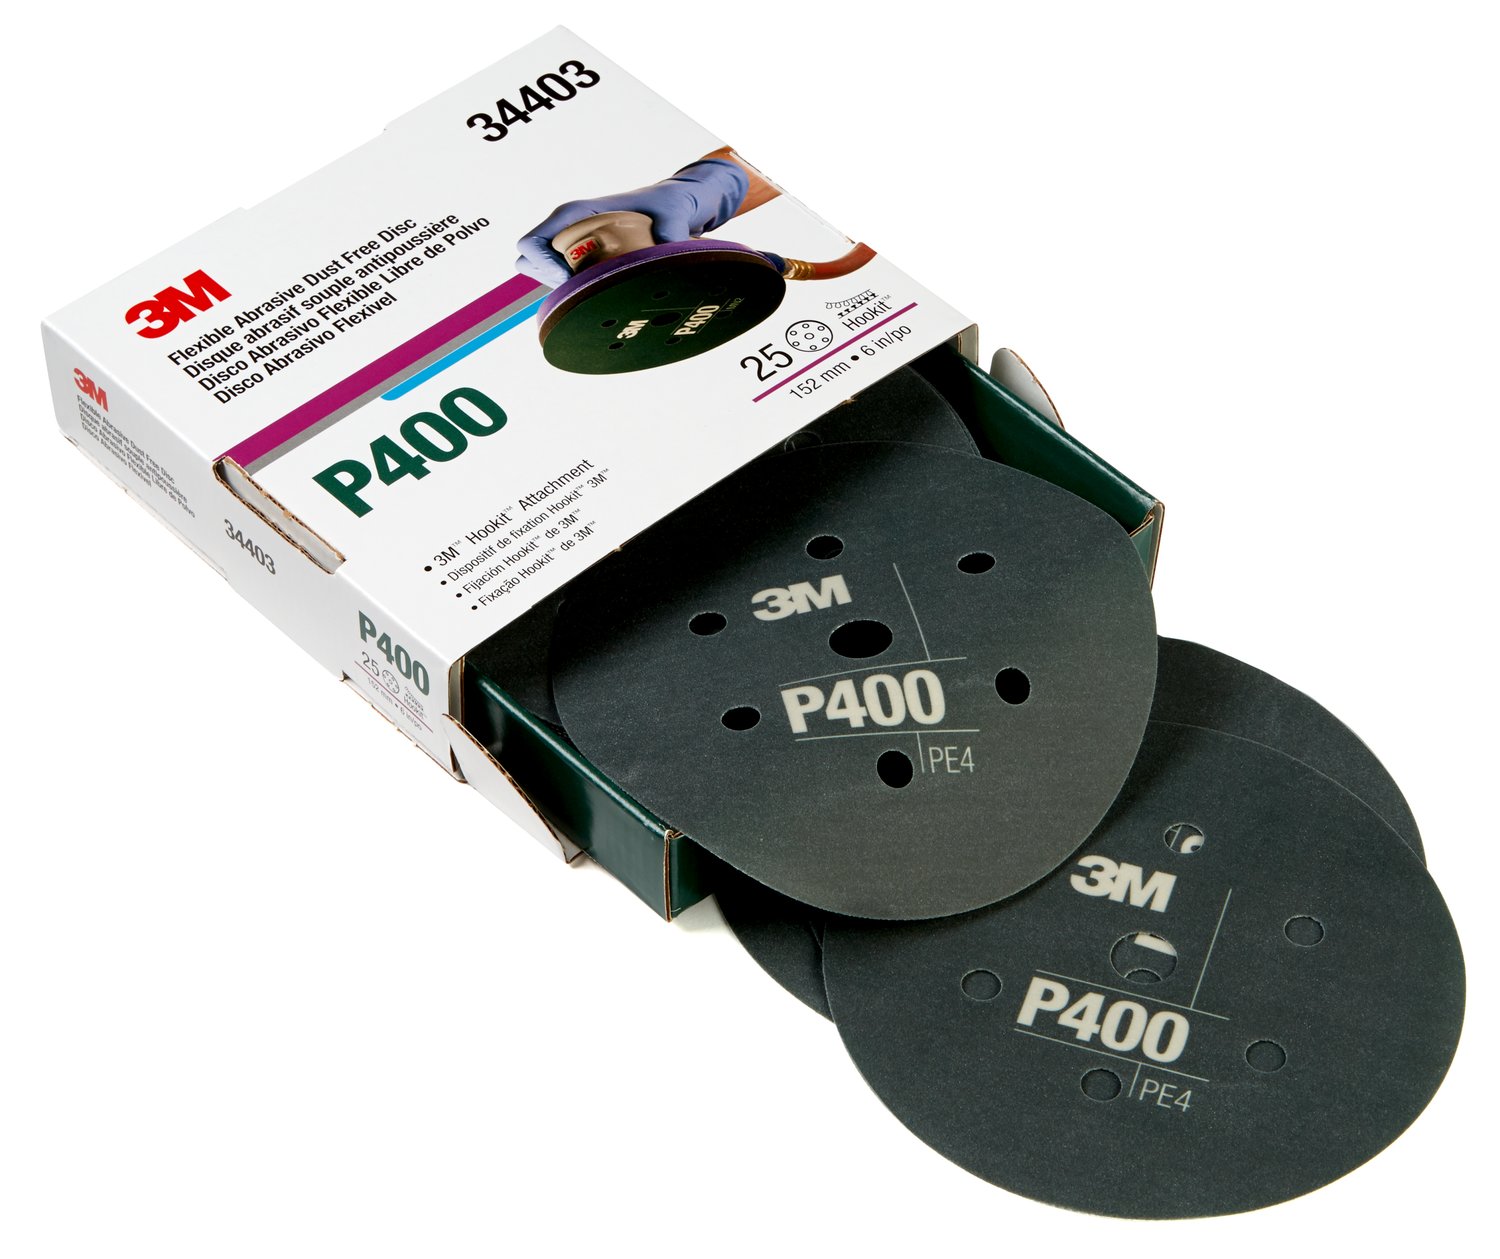 7100169504 - 3M Hookit Flexible Abrasive Disc 270J, 34426, 6 in 15H, Dust Free,
P2000, 25 disc per box, 5 boxes per case